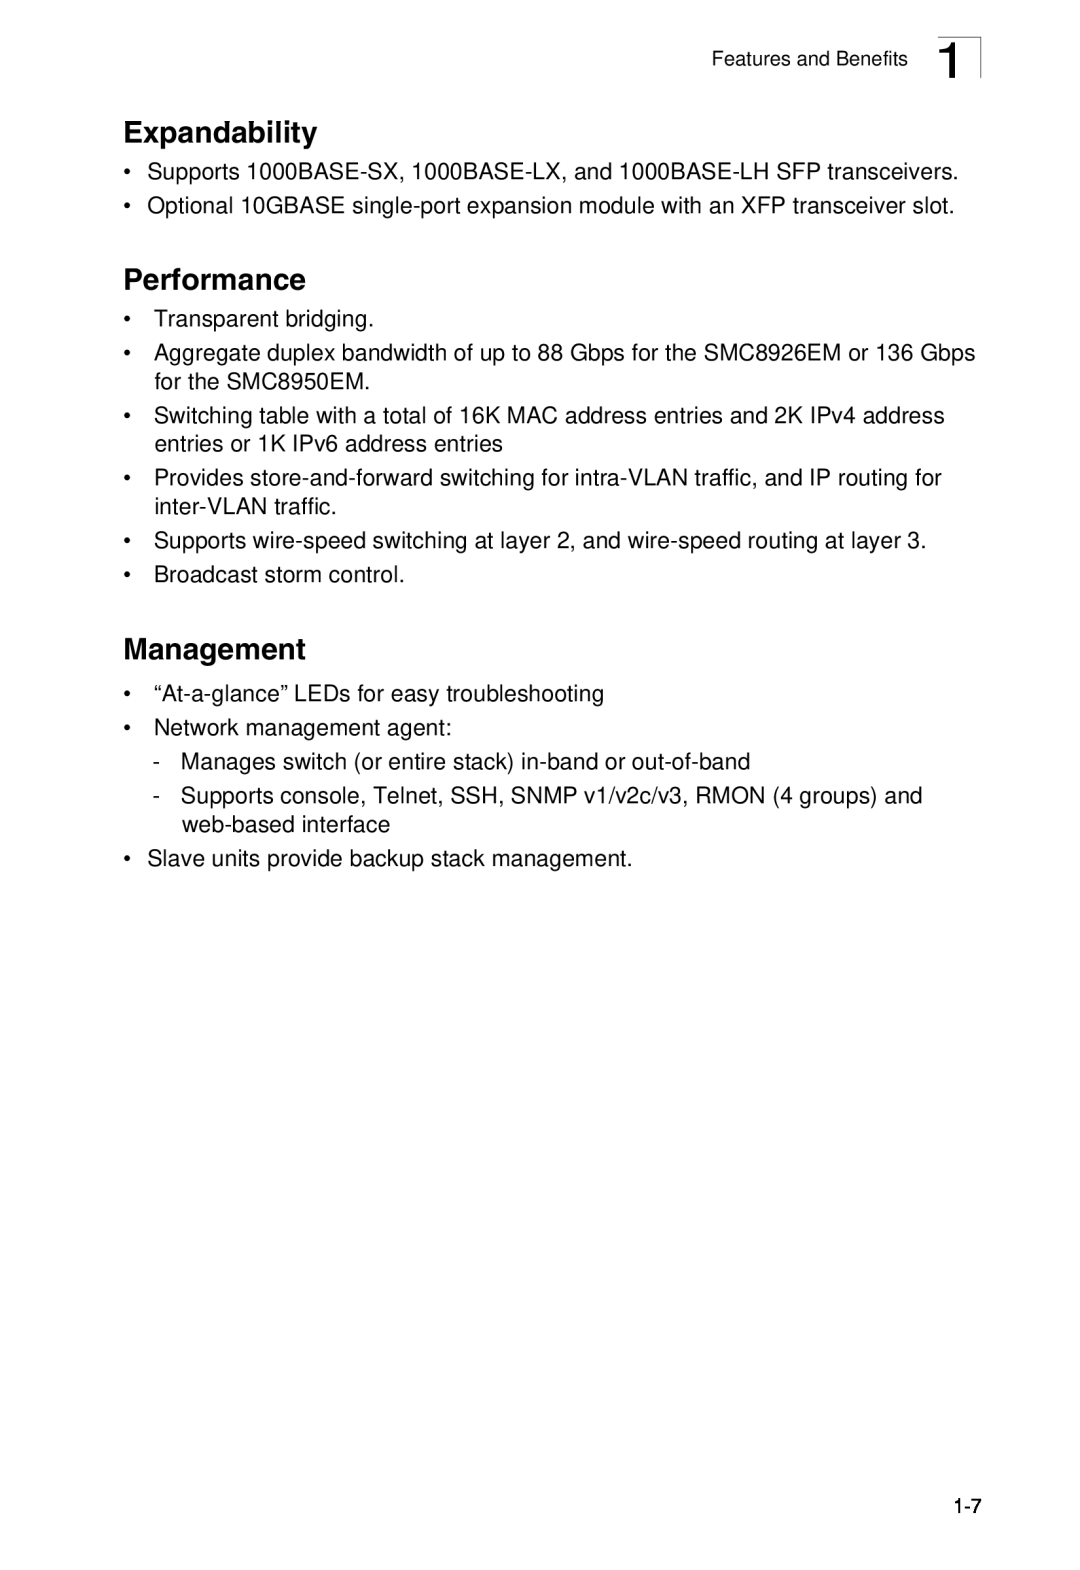 SMC Networks SMC8950EM, SMC8926EM manual Expandability, Performance, Management 